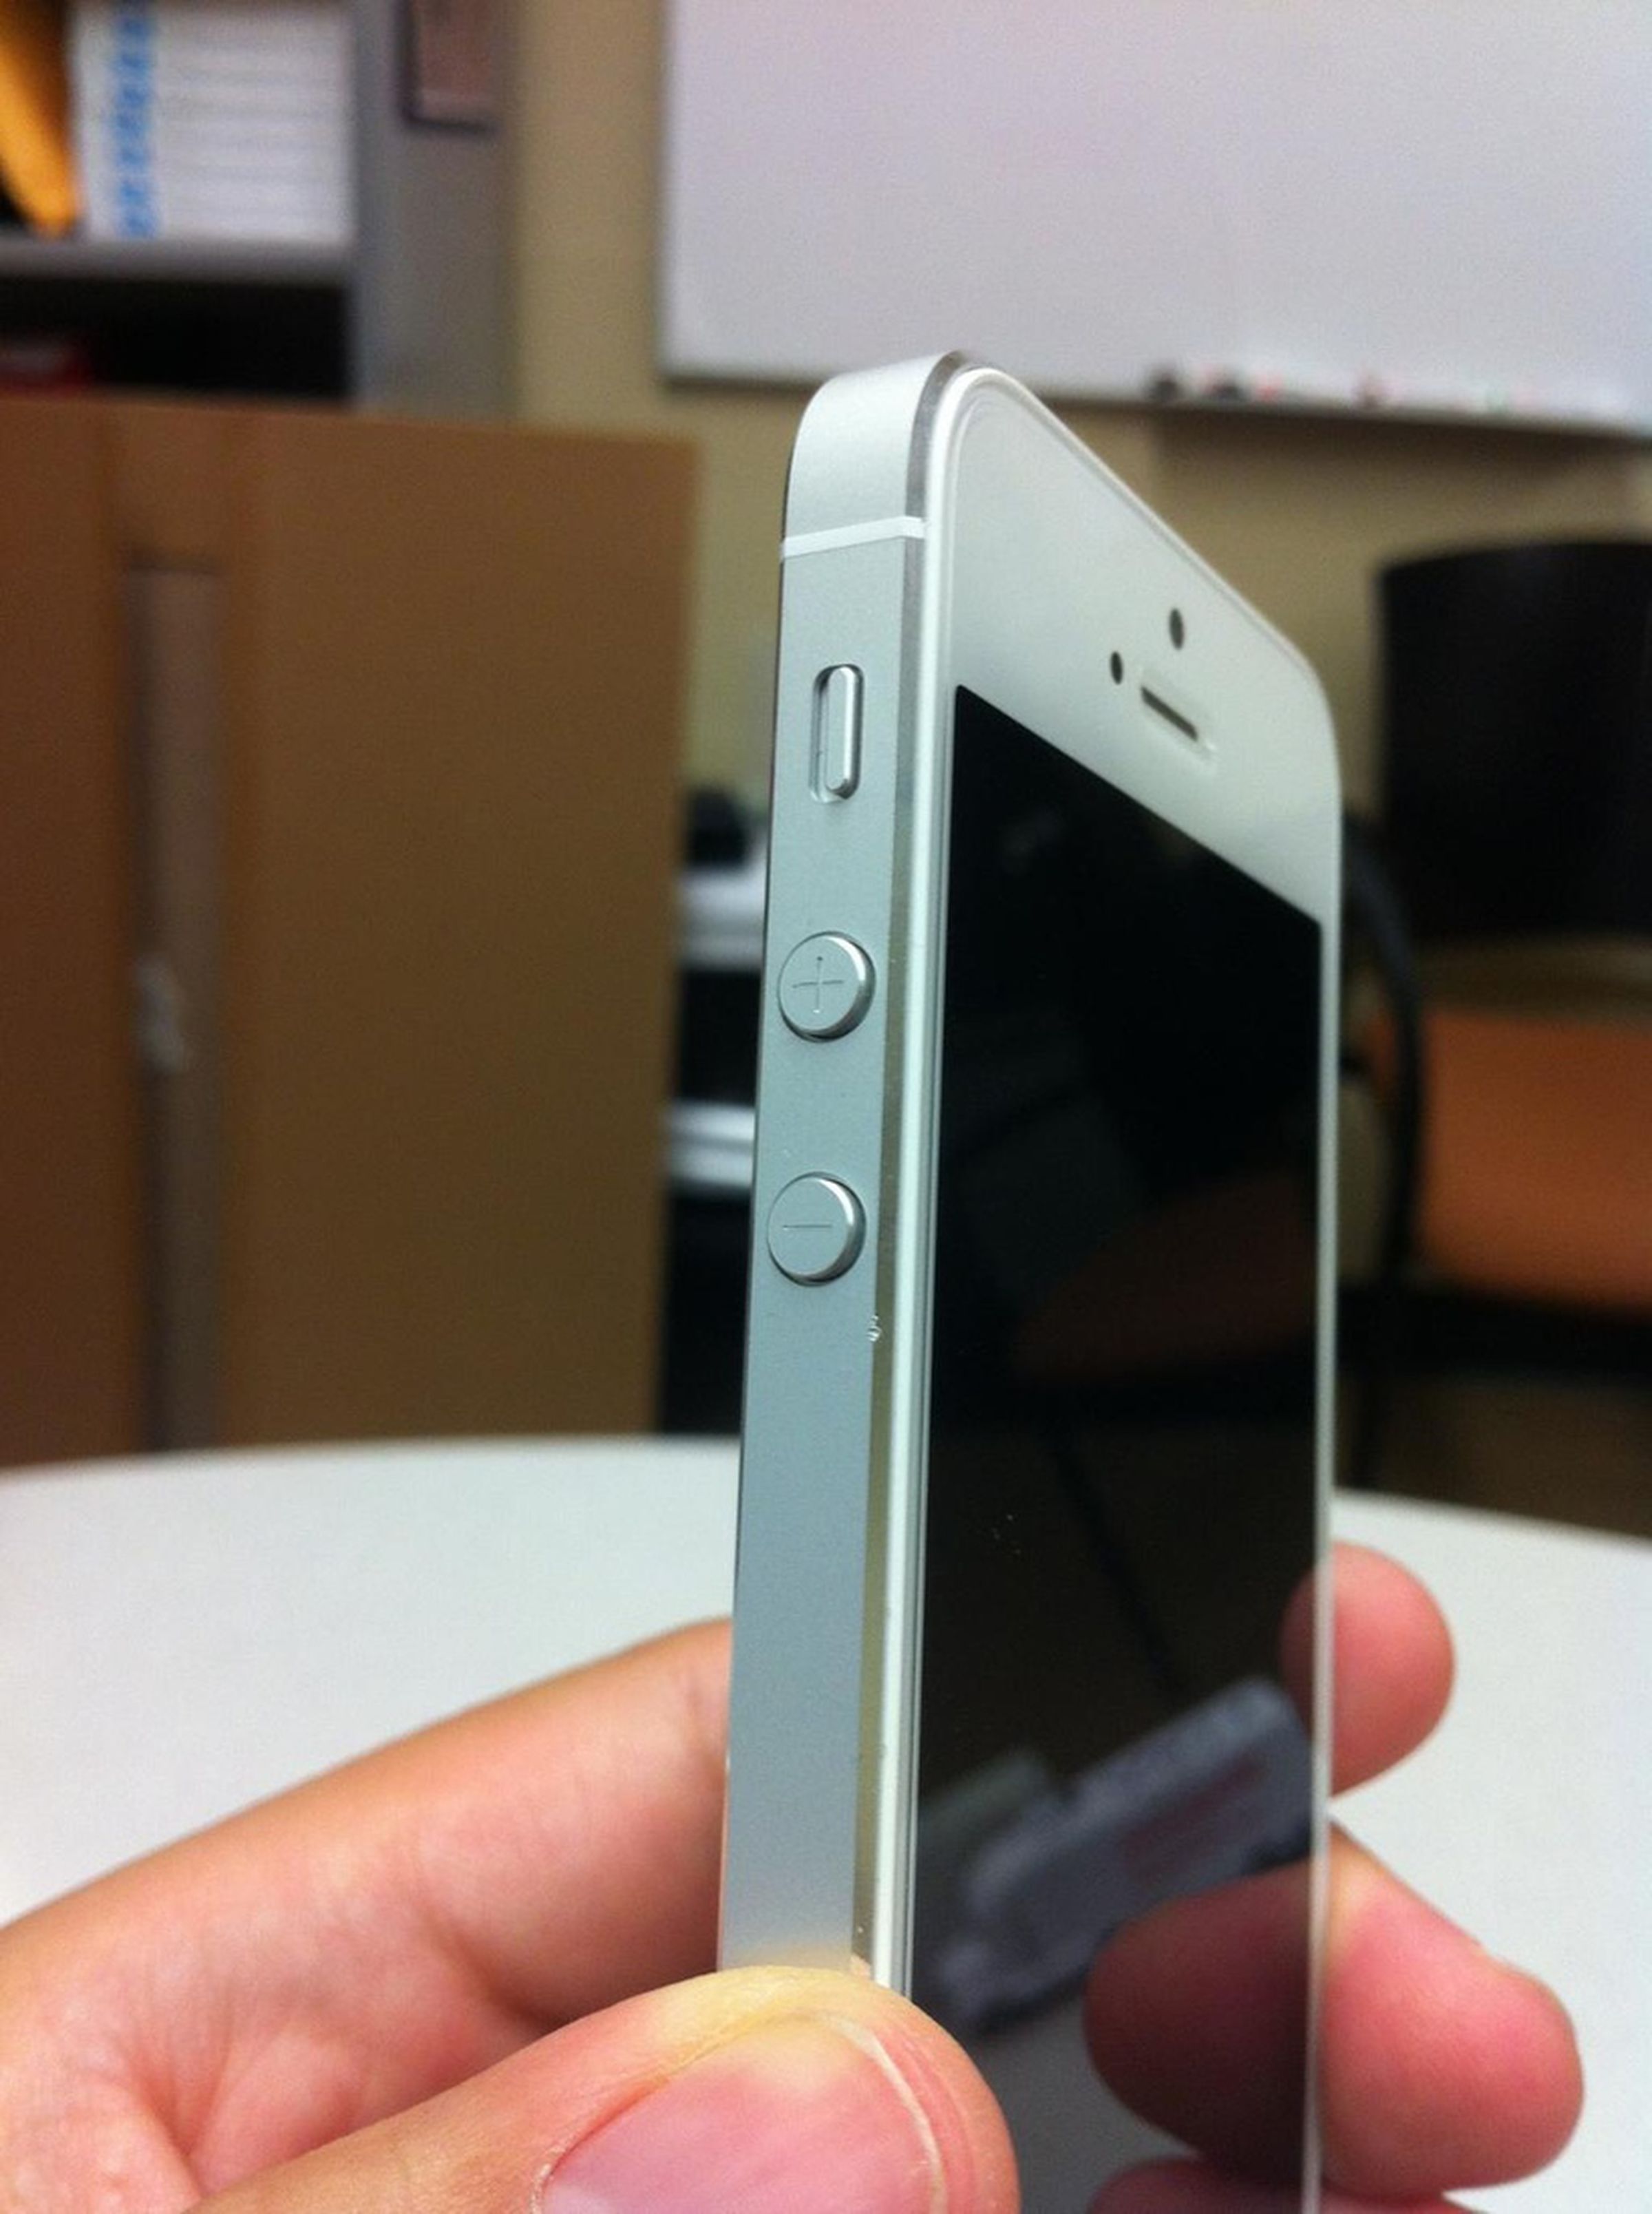 iPhone 5 scuff photos